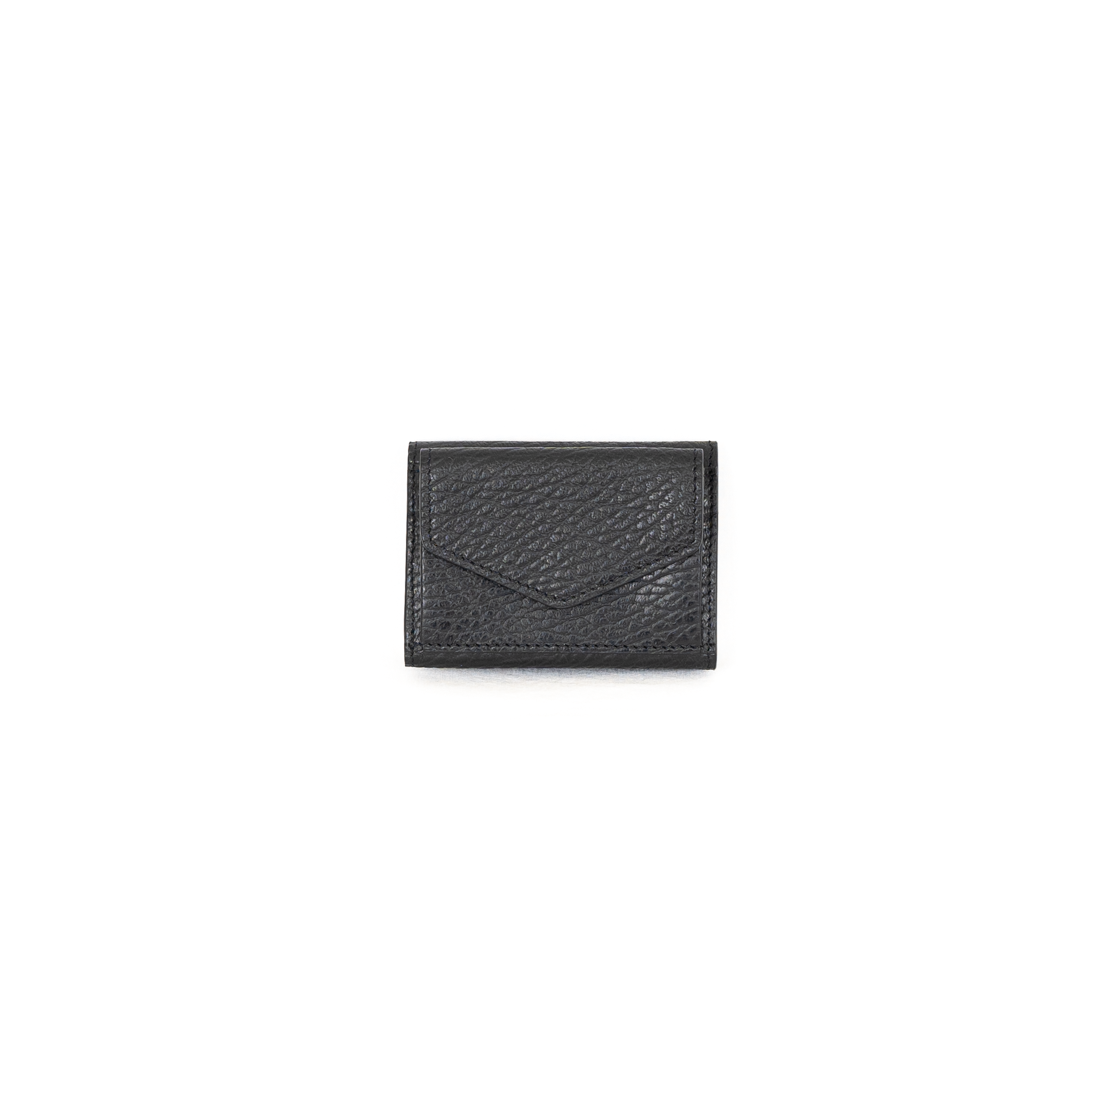 Maison Margiela / Four stitches pocket wallet - carol ONLINE STORE